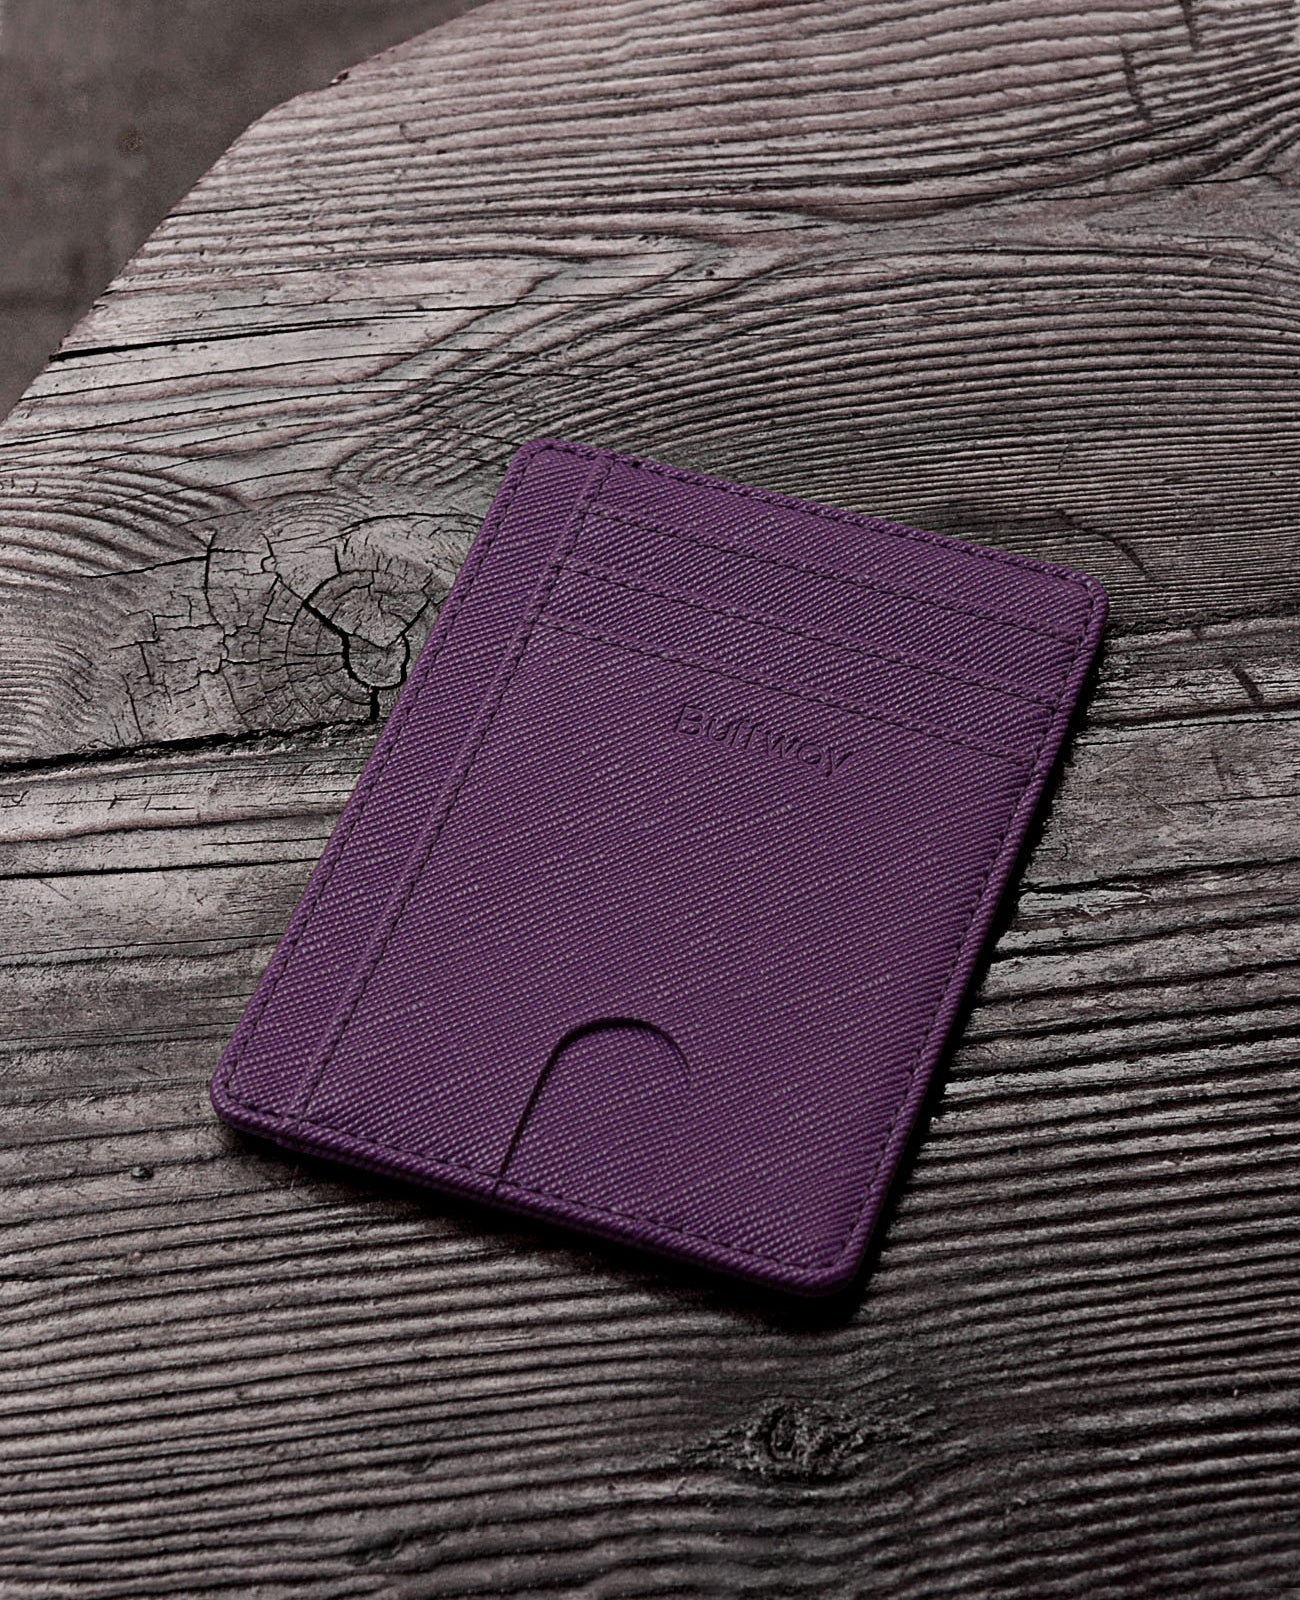 Buffway Slim Minimalist Front Pocket RFID Blocking Leather Wallets for Men and Women - Cross Purple